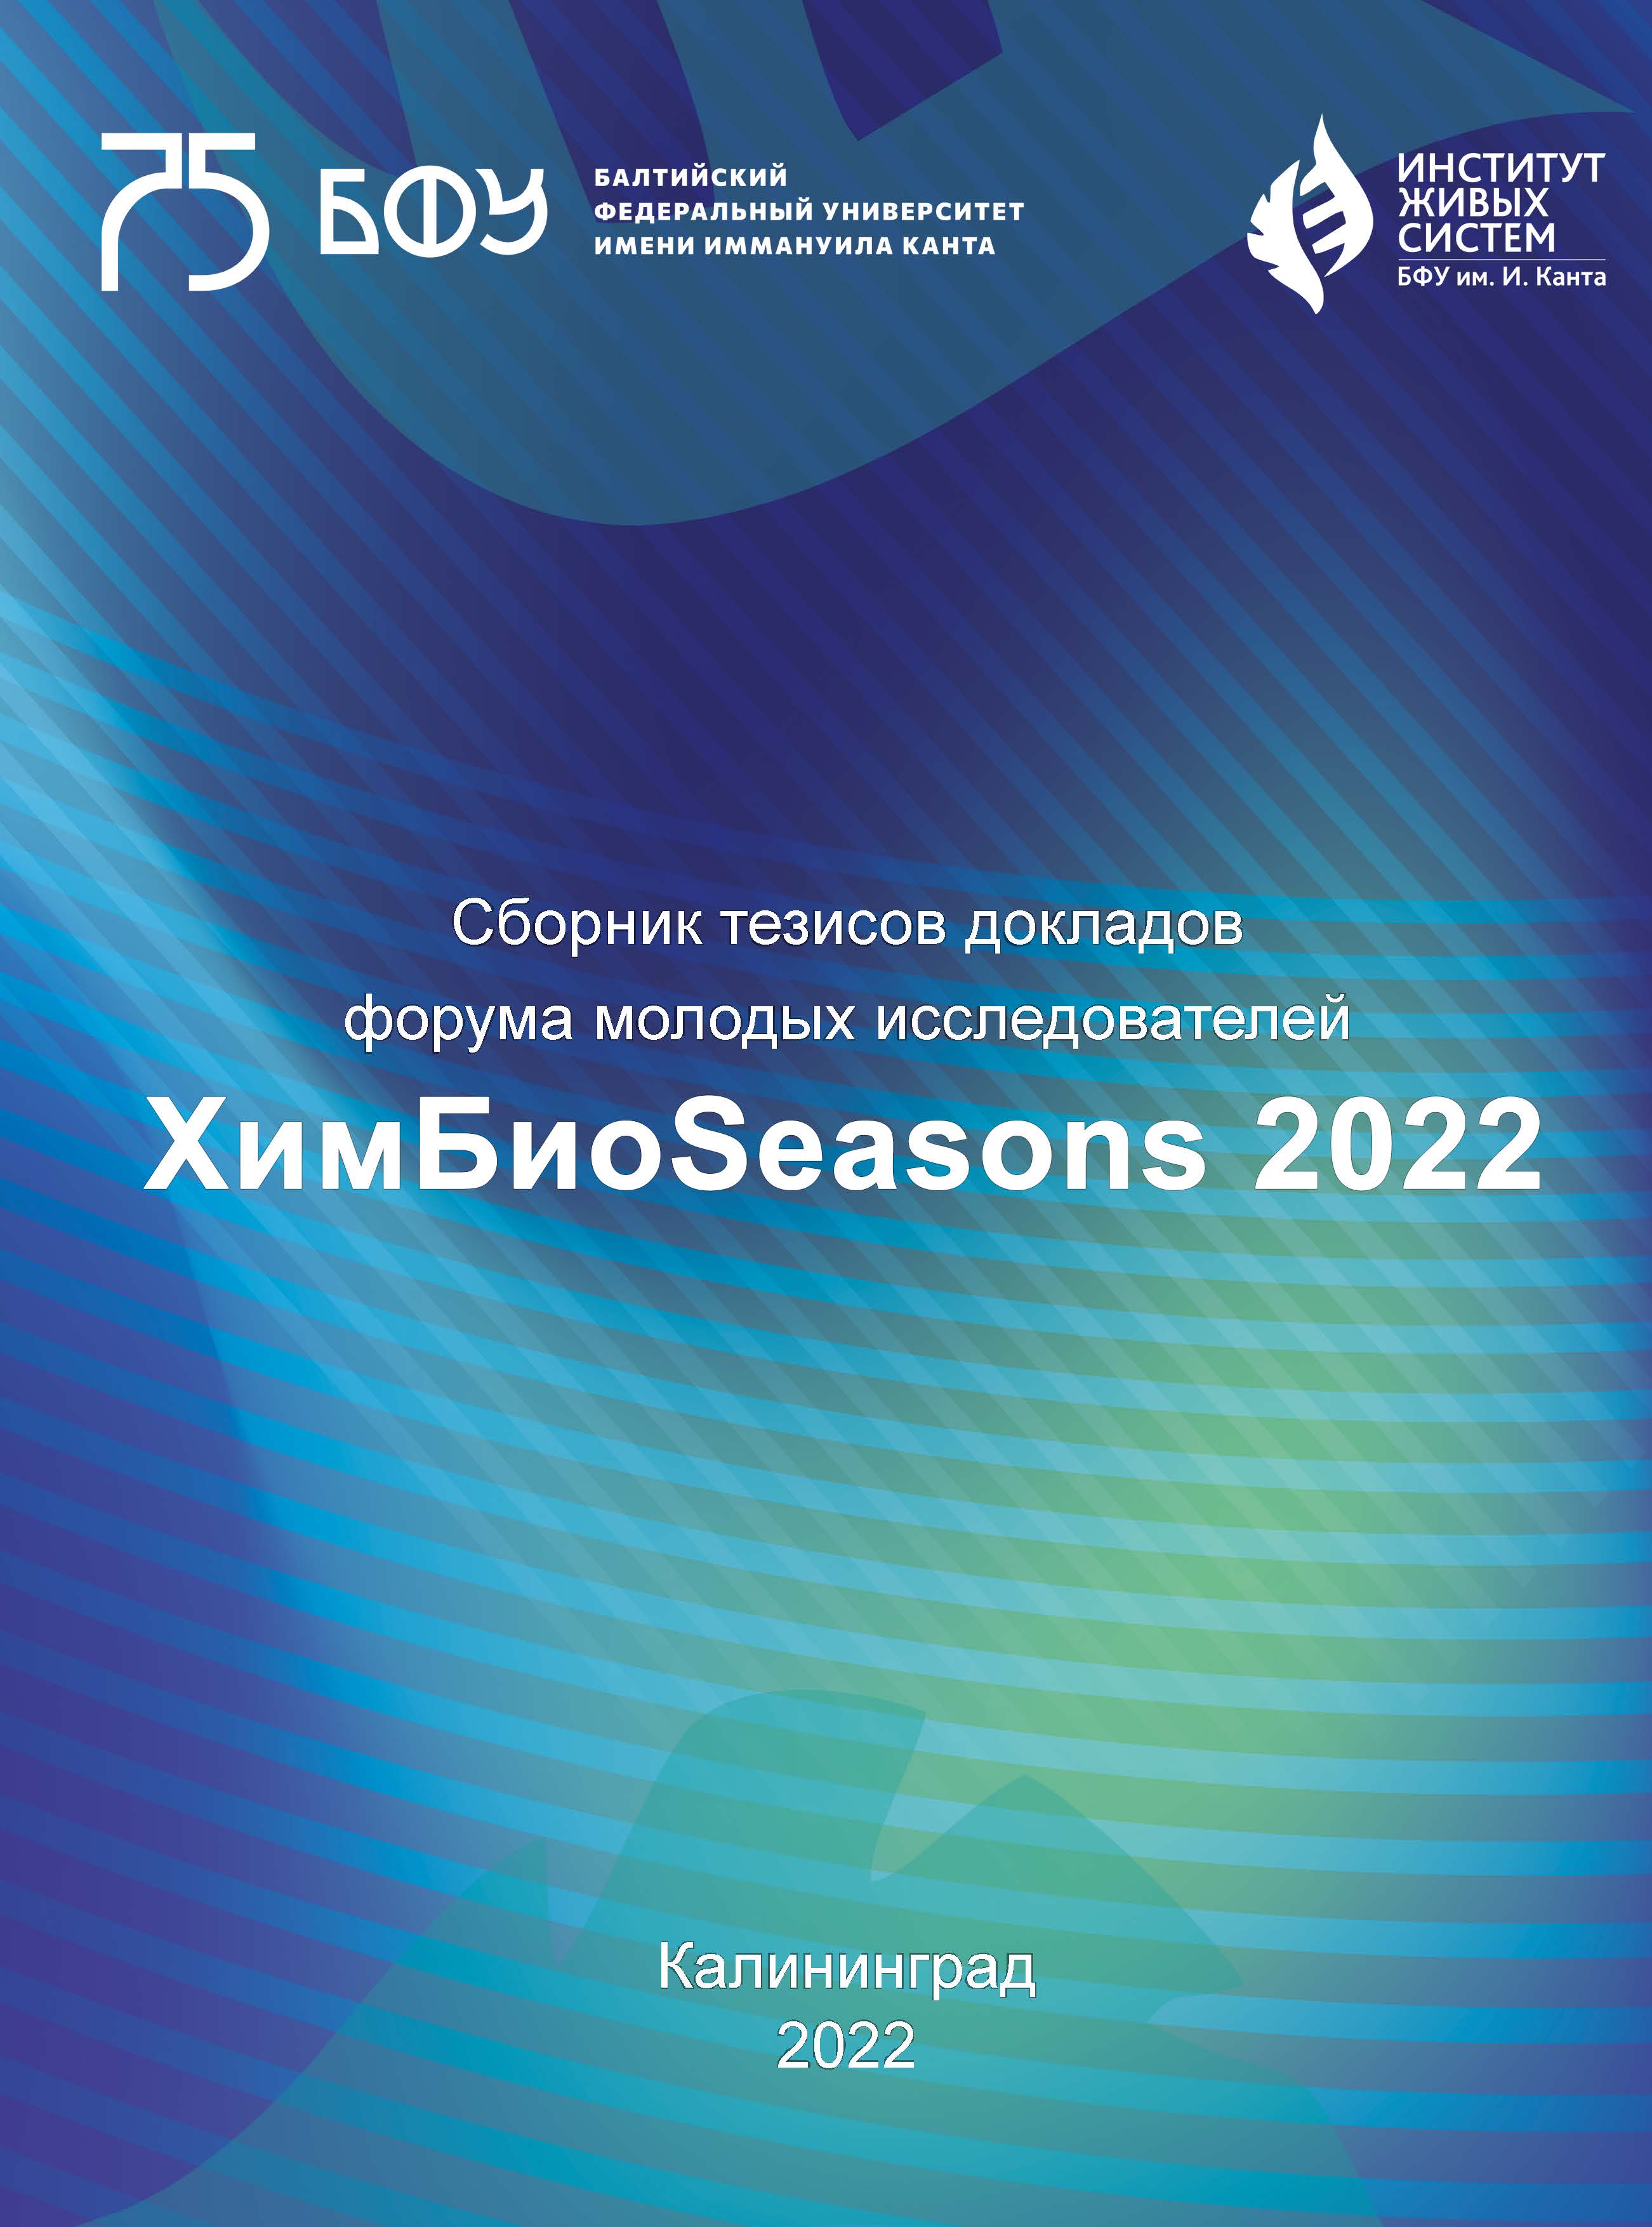                         ChemBioSeasons 2022
            